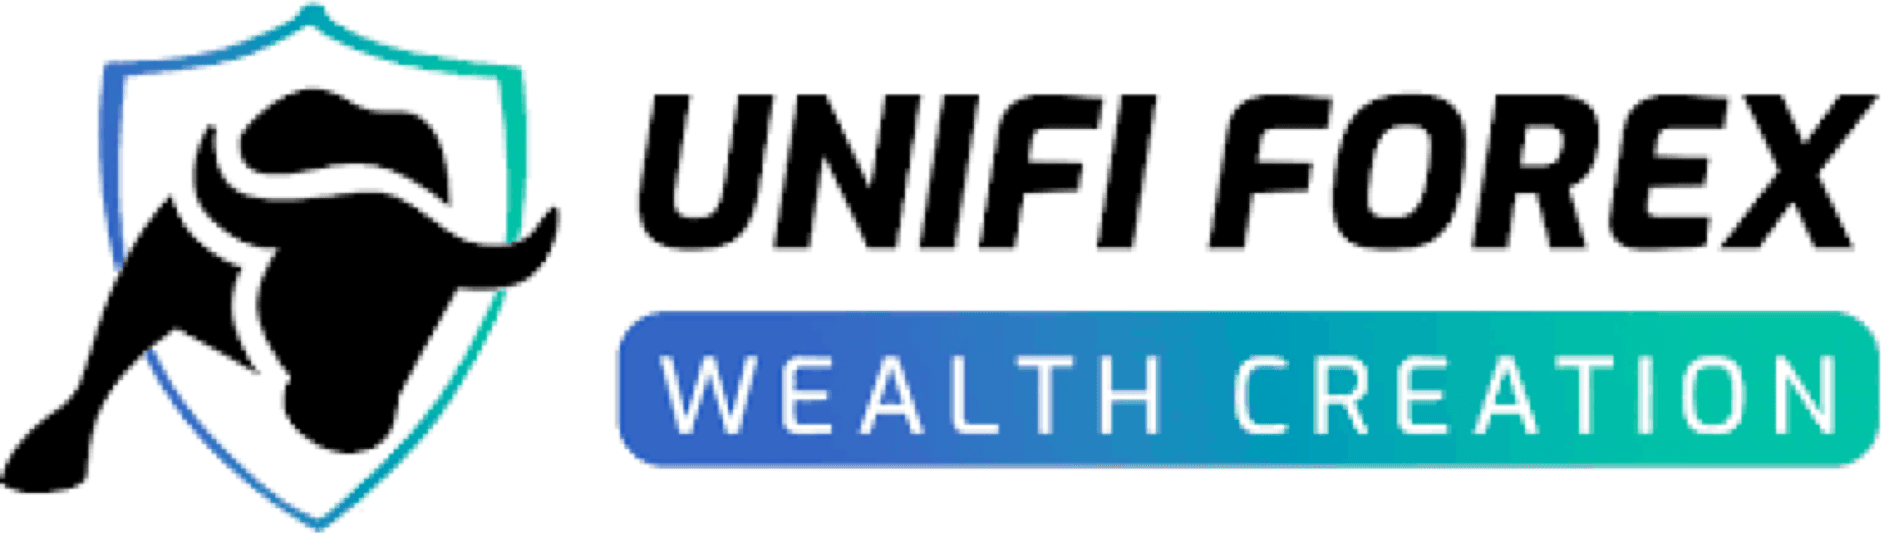 Unifi Forex